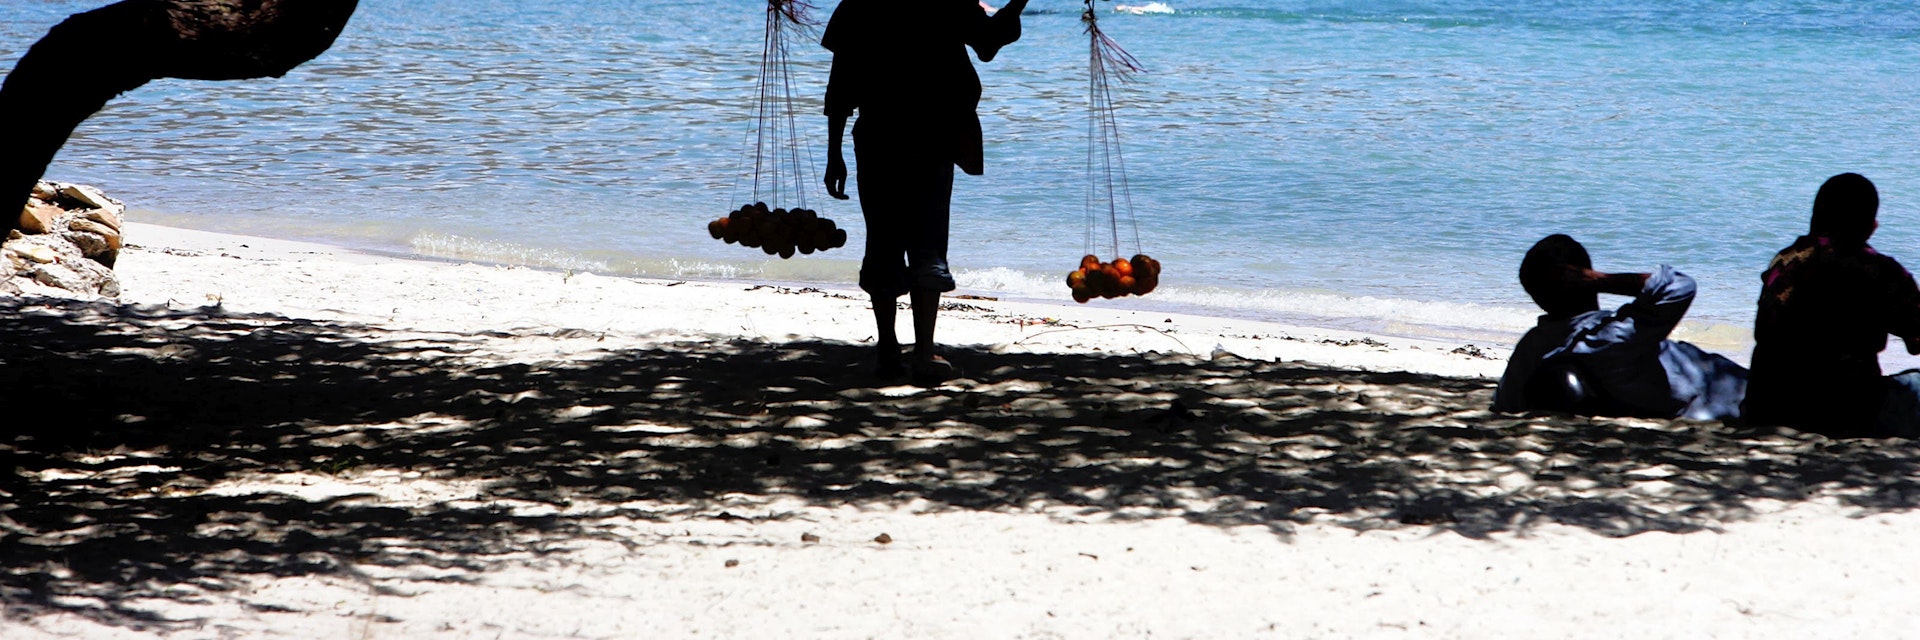 Timor, orange vendor on a beach in Dili